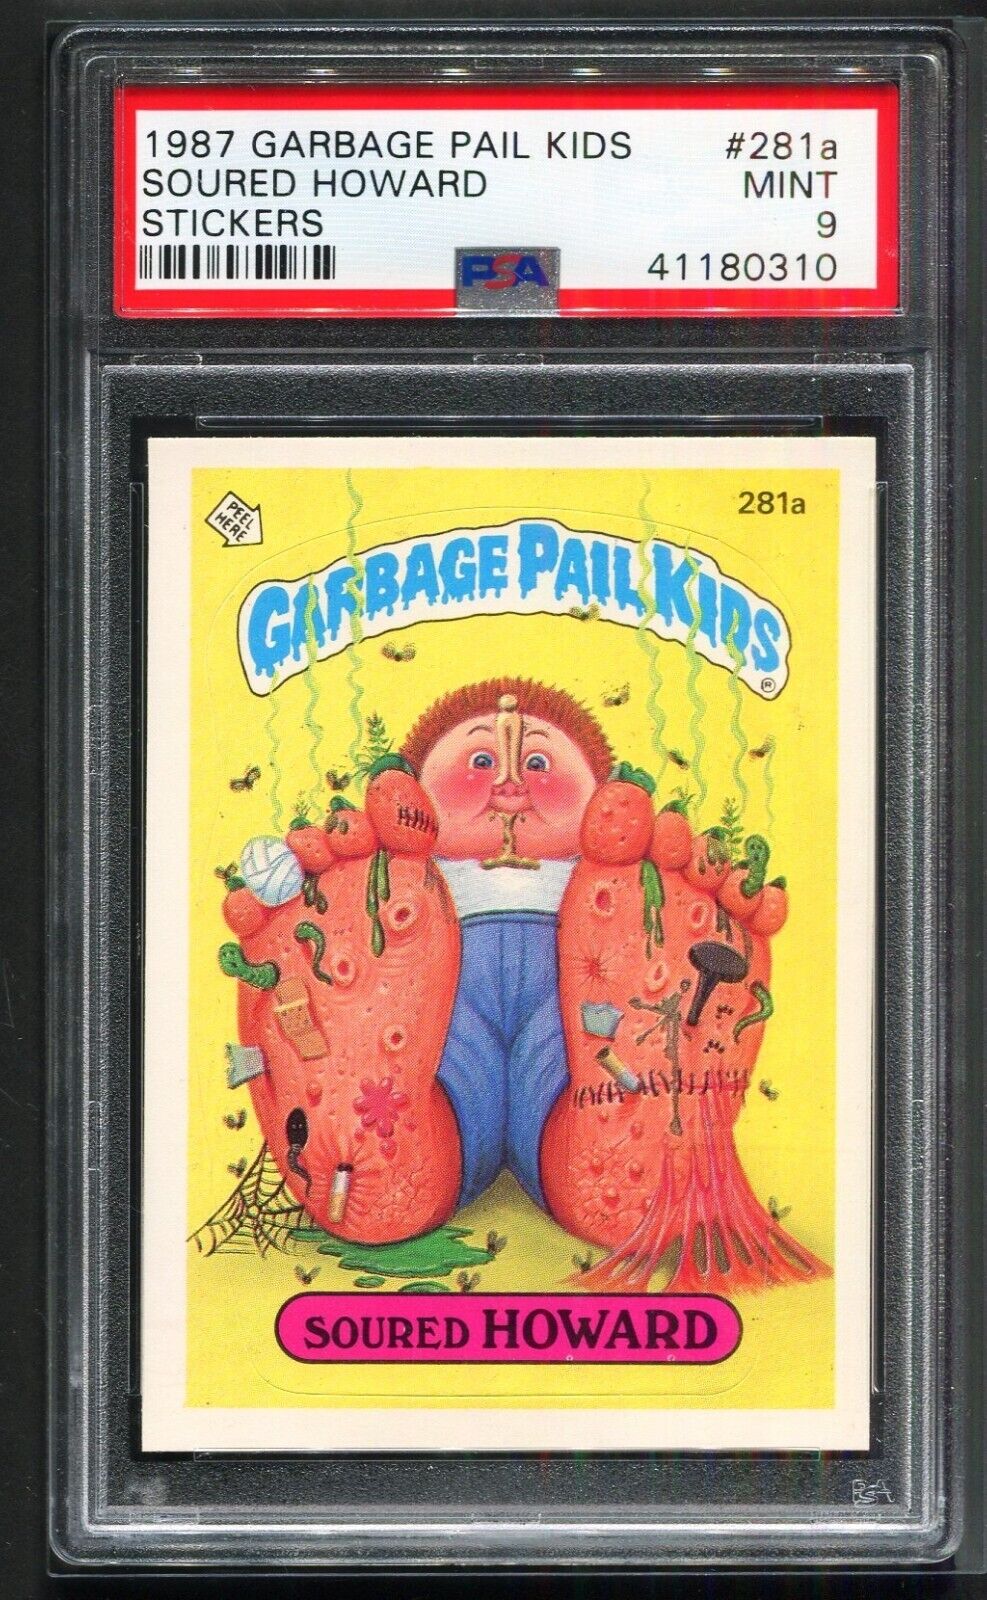 1987 Garbage Pail Kids Stickers #281a SOURED HOWARD PSA 9 MINT